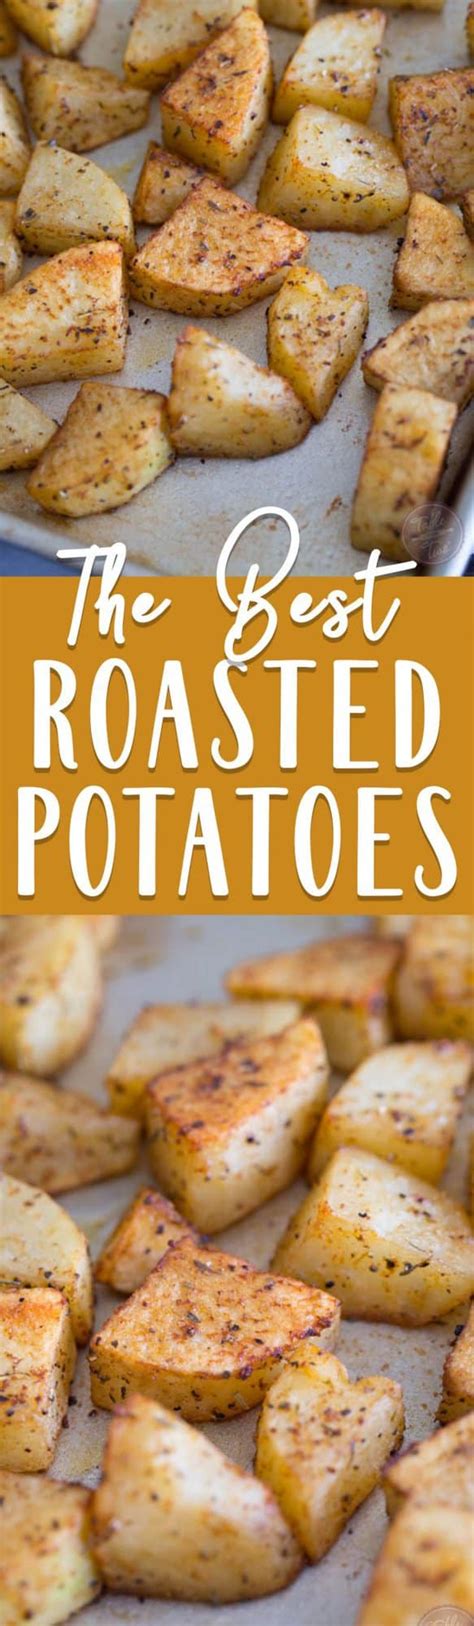 Our Favorite Way To Roast Potatoes A Russet Potato Recipe